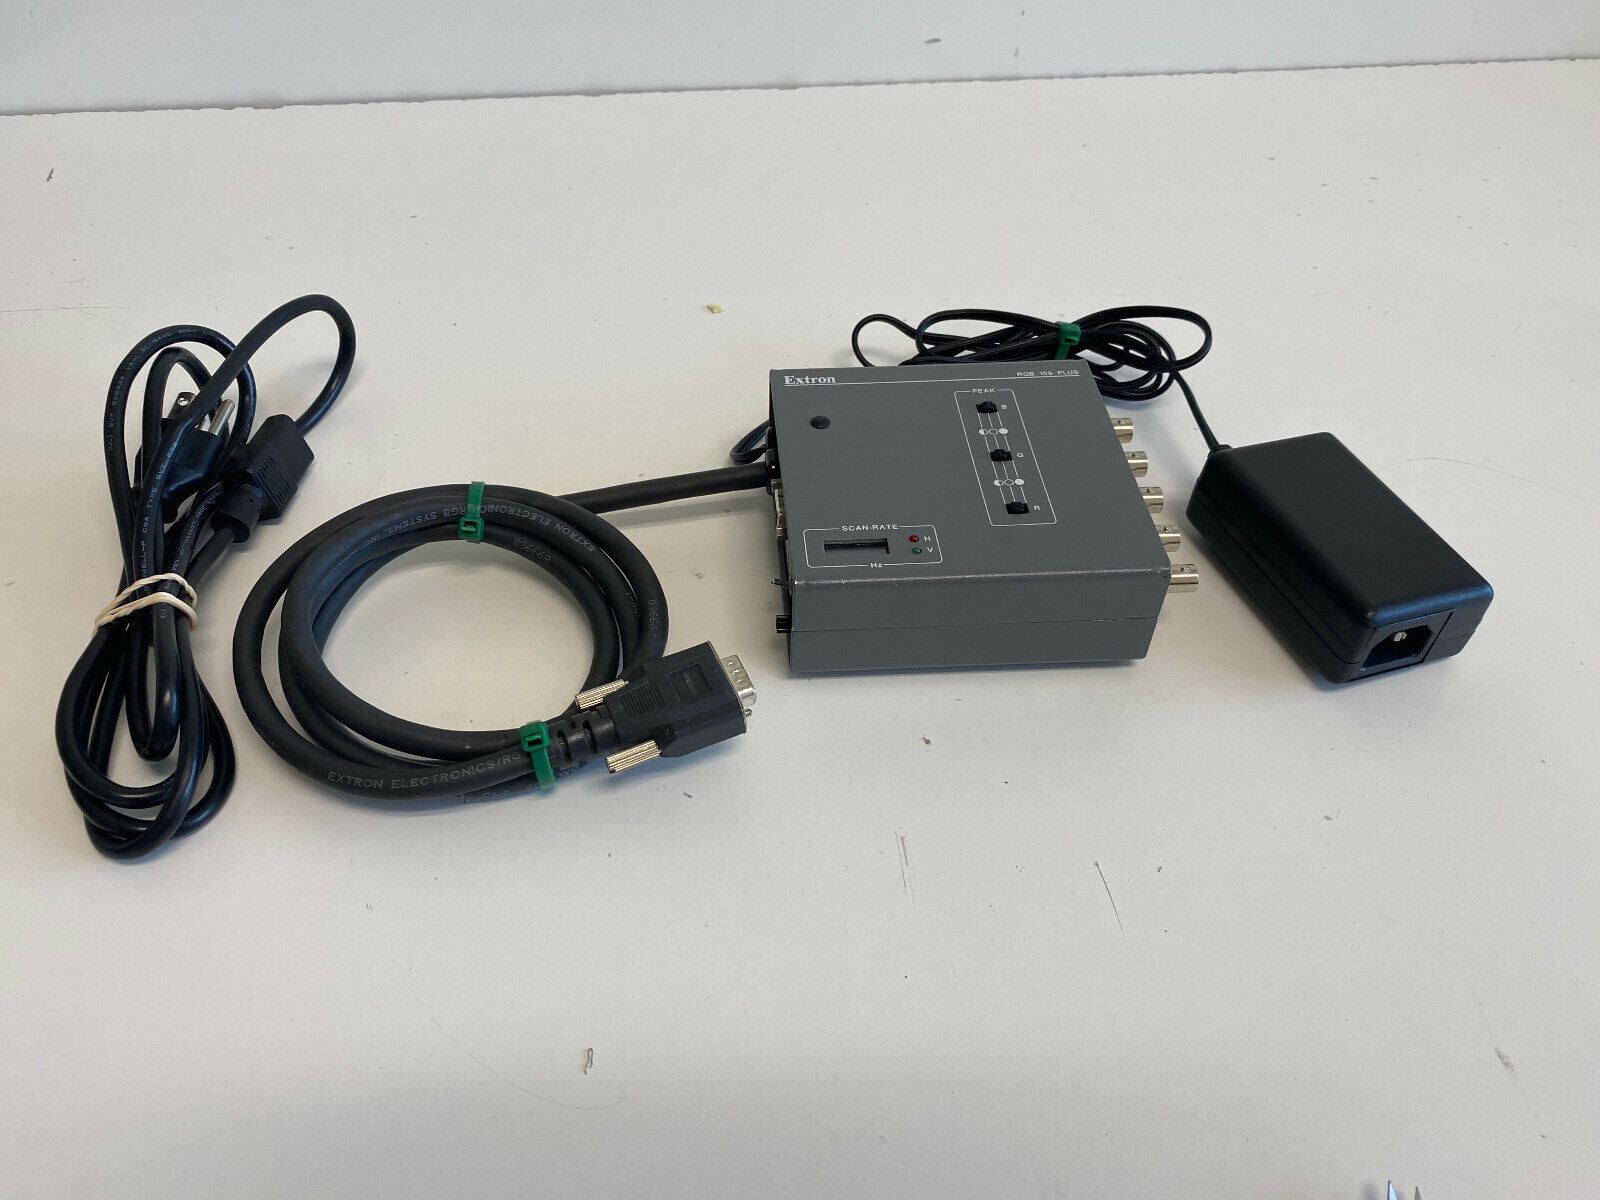 Bb4:  Extron Electronics Rgb 109 Plus Video Interface